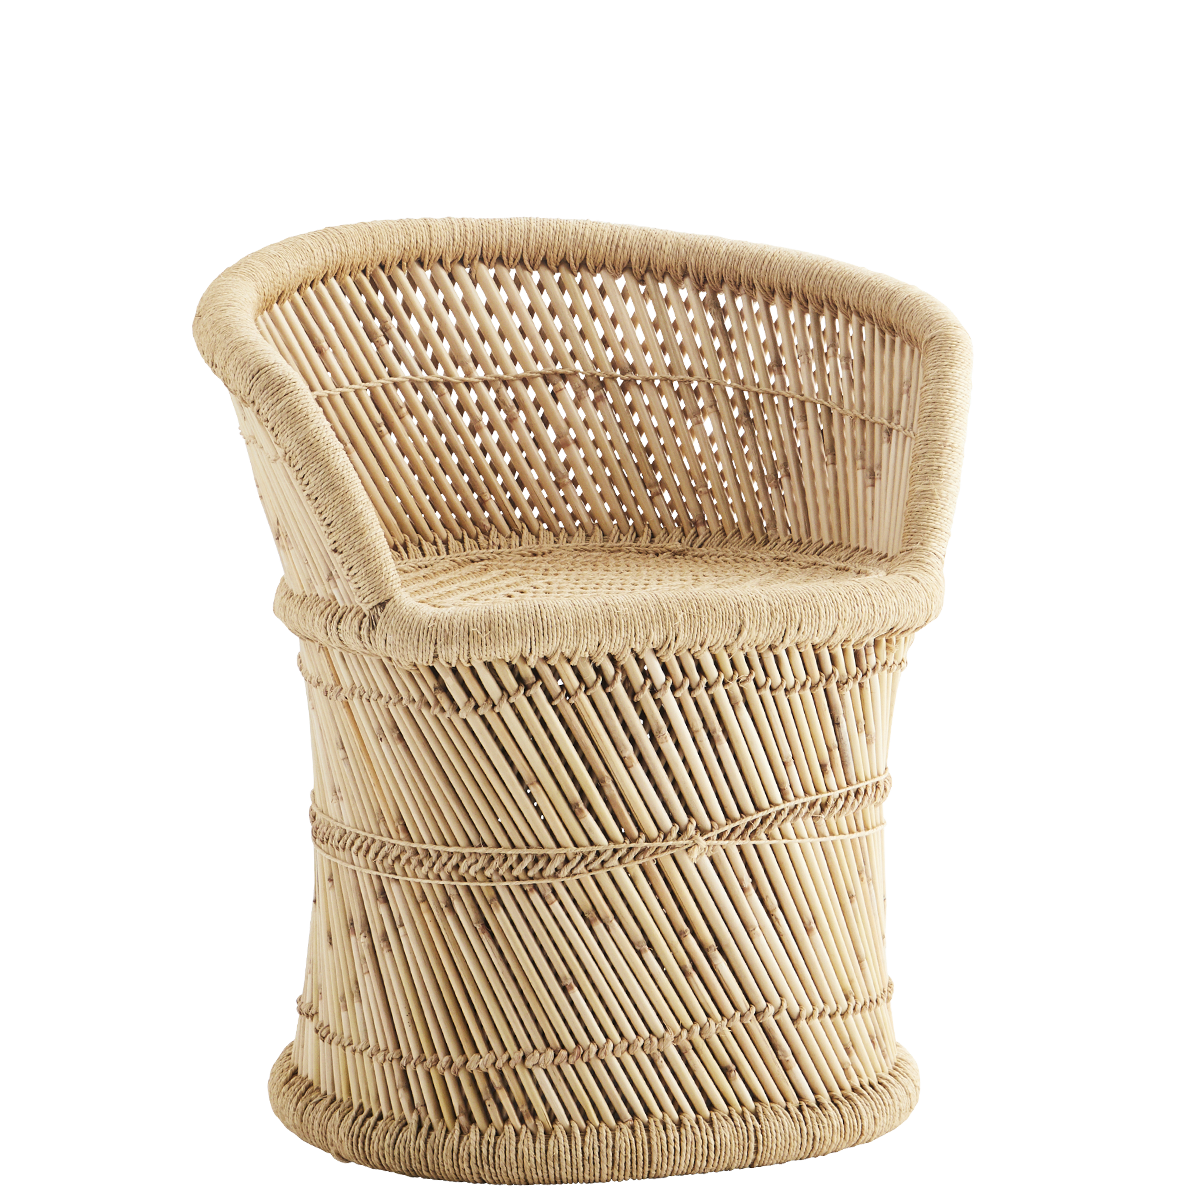 Bamboo chair w/ jute rope